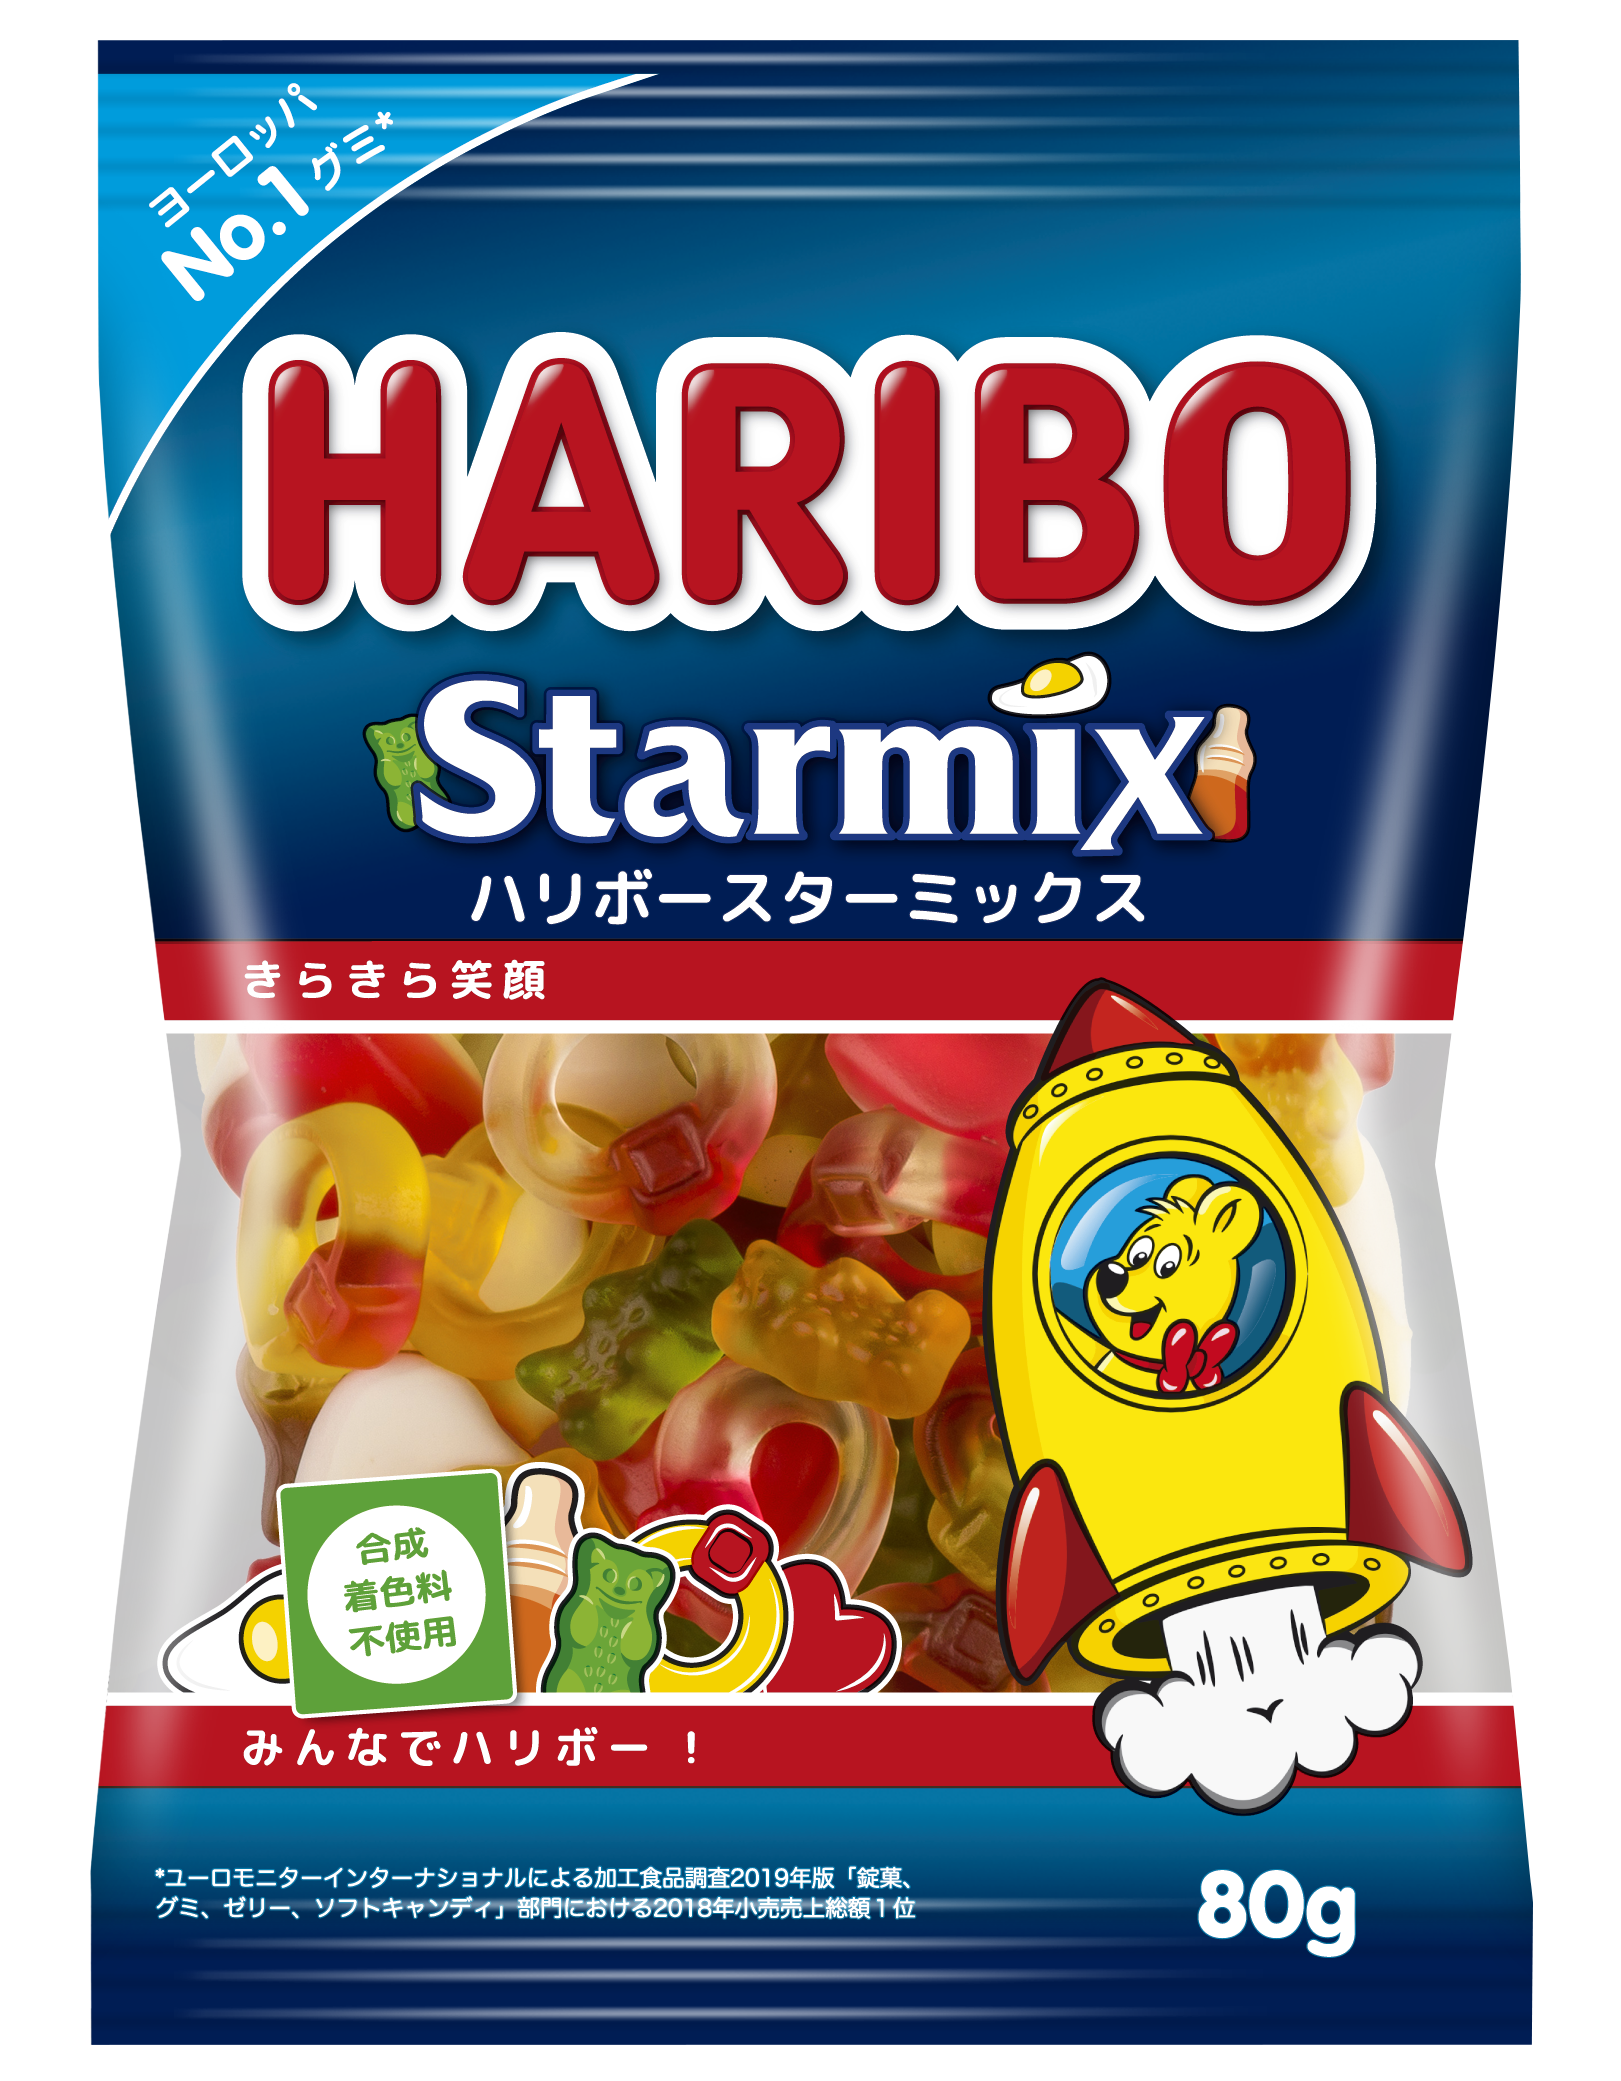 Bag of HARIBO Starmix